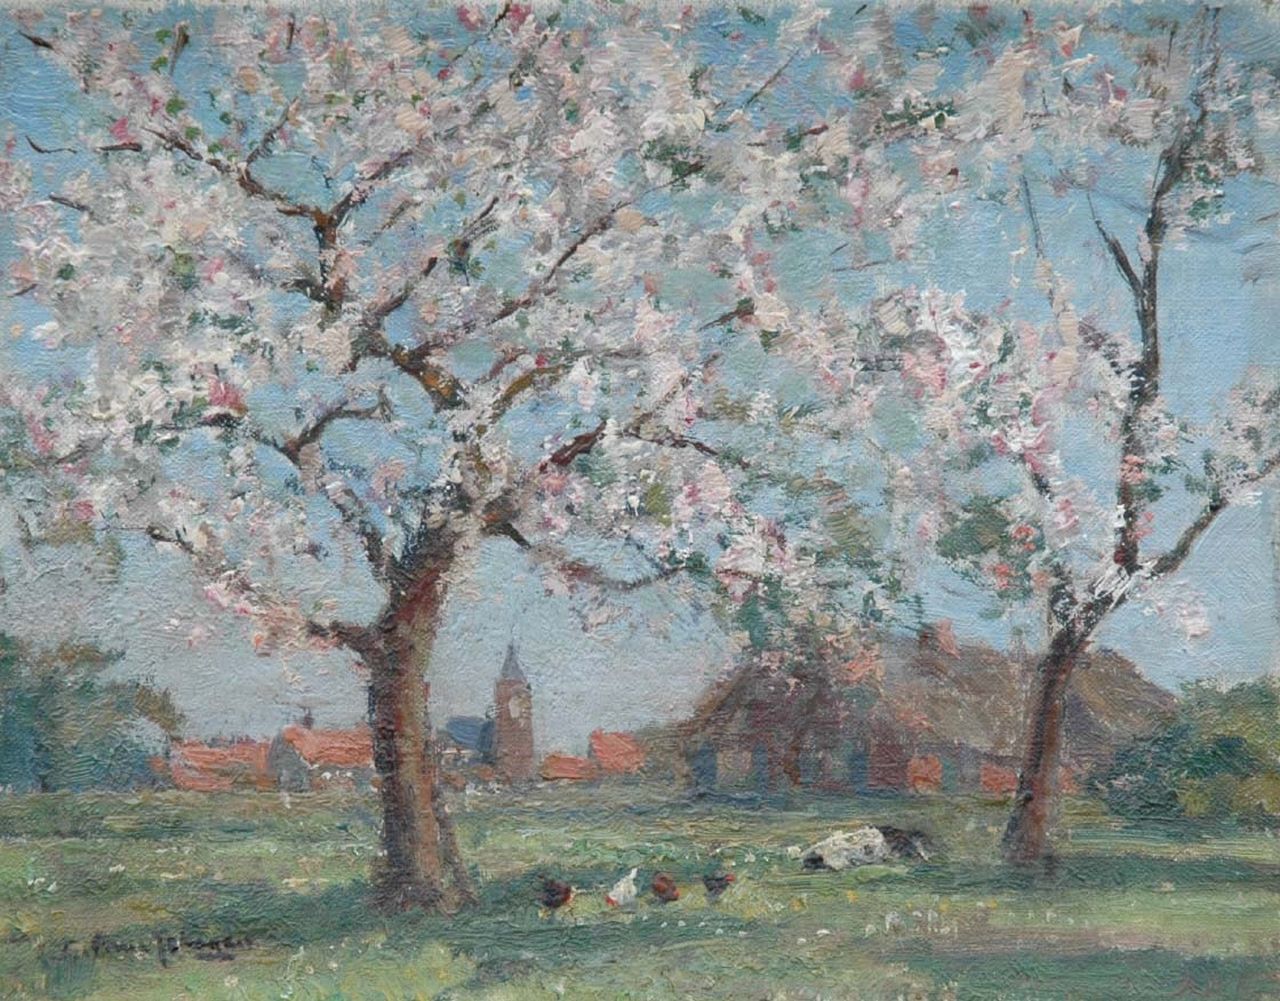 Schagen G.F. van | Gerbrand Frederik van Schagen, Chickens under blossoming trees, oil on canvas laid down on panel 19.3 x 24.5 cm, signed l.l.